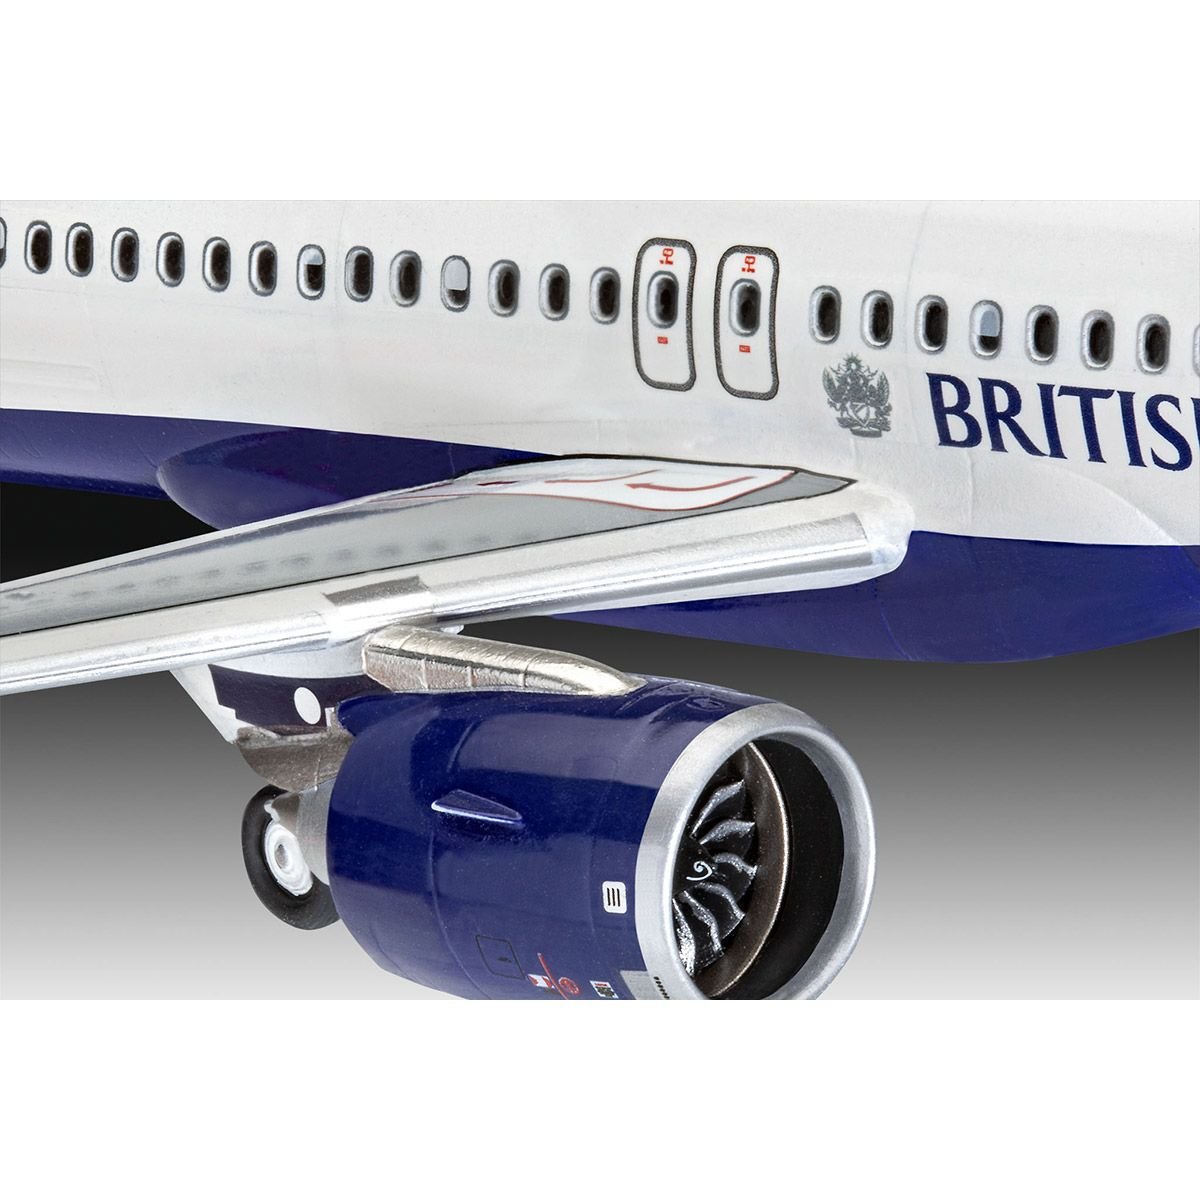 Сборная модель самолета Revell Набор Airbus A320neo British Airways, уровень, 4 масштаб 1:144, 66 деталей (RVL-63840) - фото 3